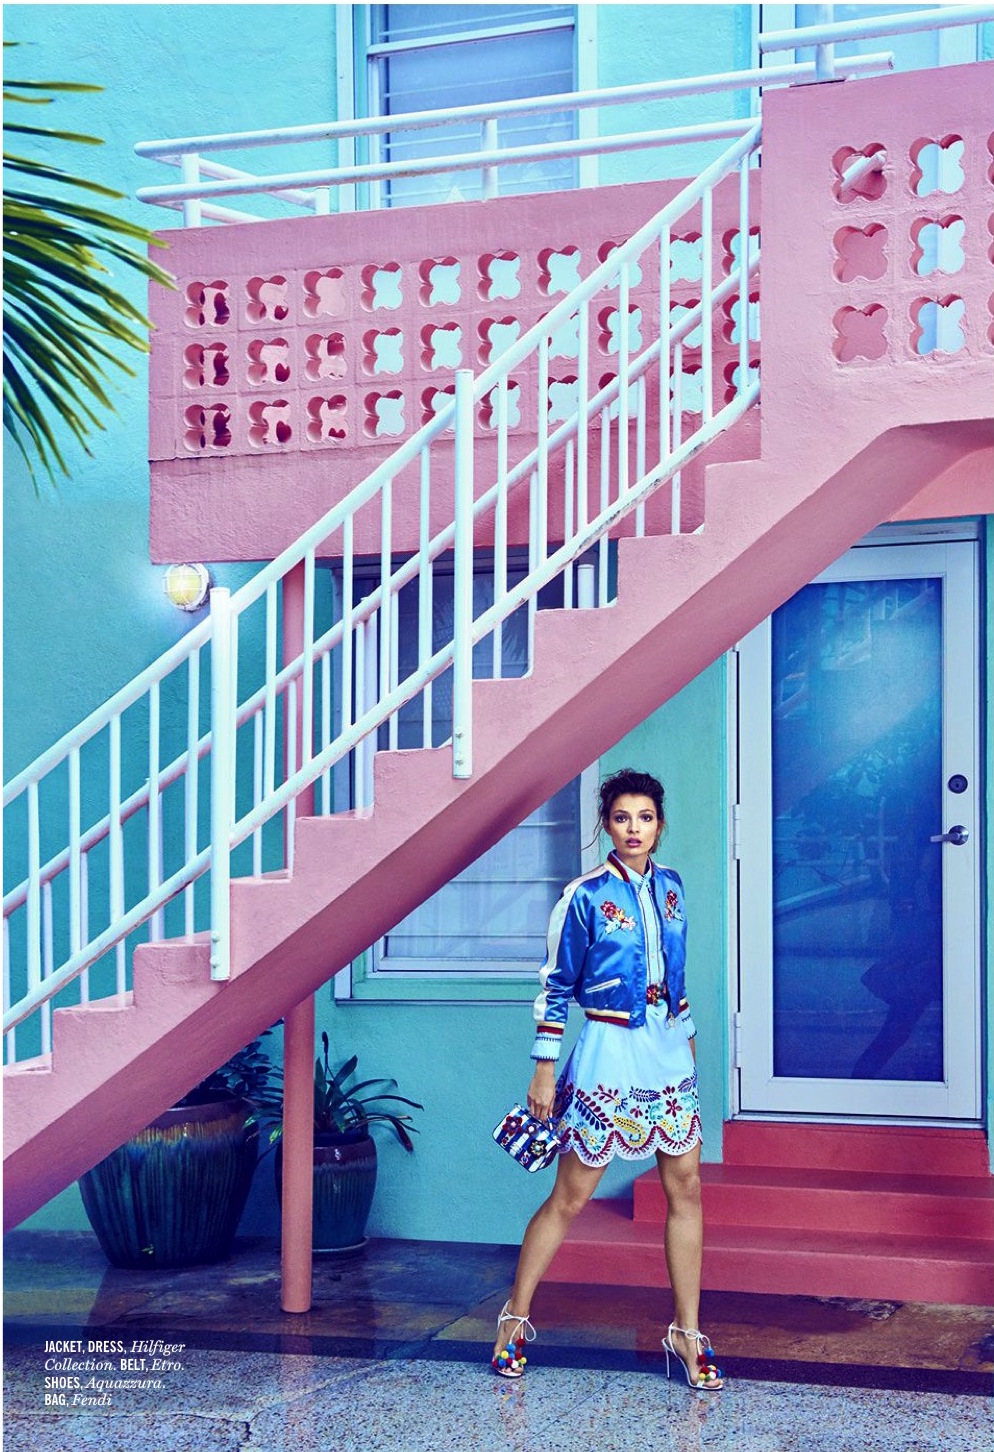 Carola Remer for Cosmopolitan US June 2016 by James Macari Hilfiger outfit